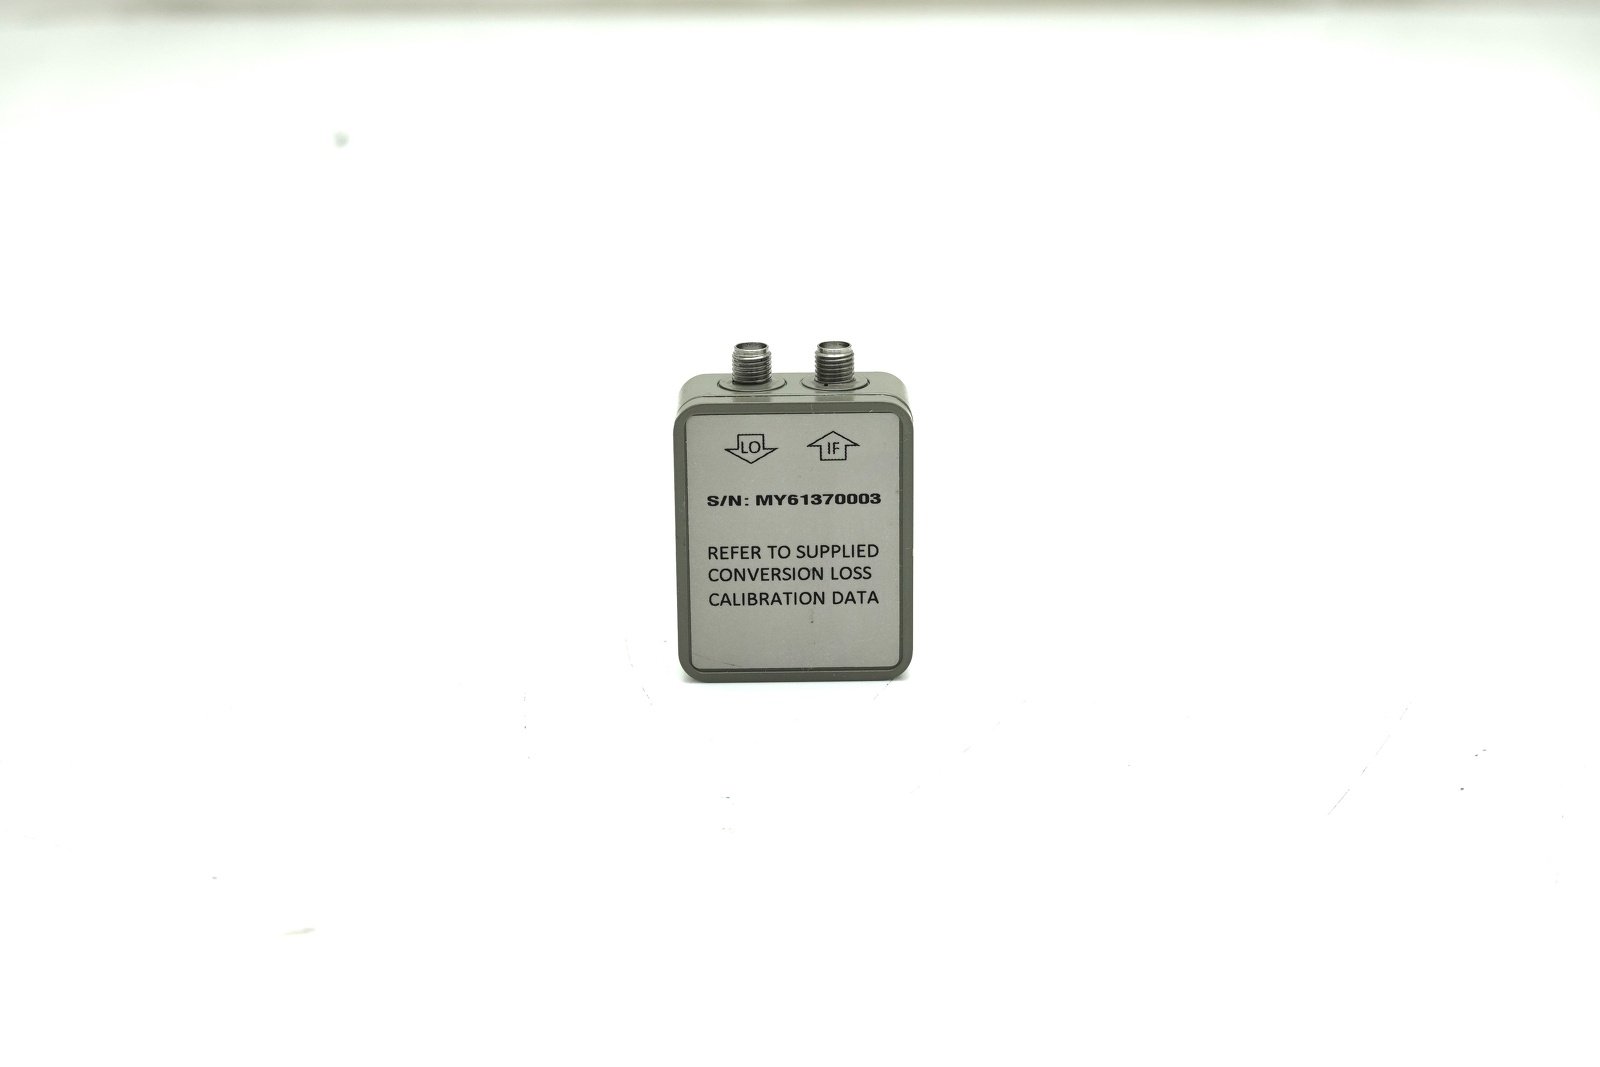 Keysight 11970U Waveguide Harmonic Mixer / 40 to 60 GHz